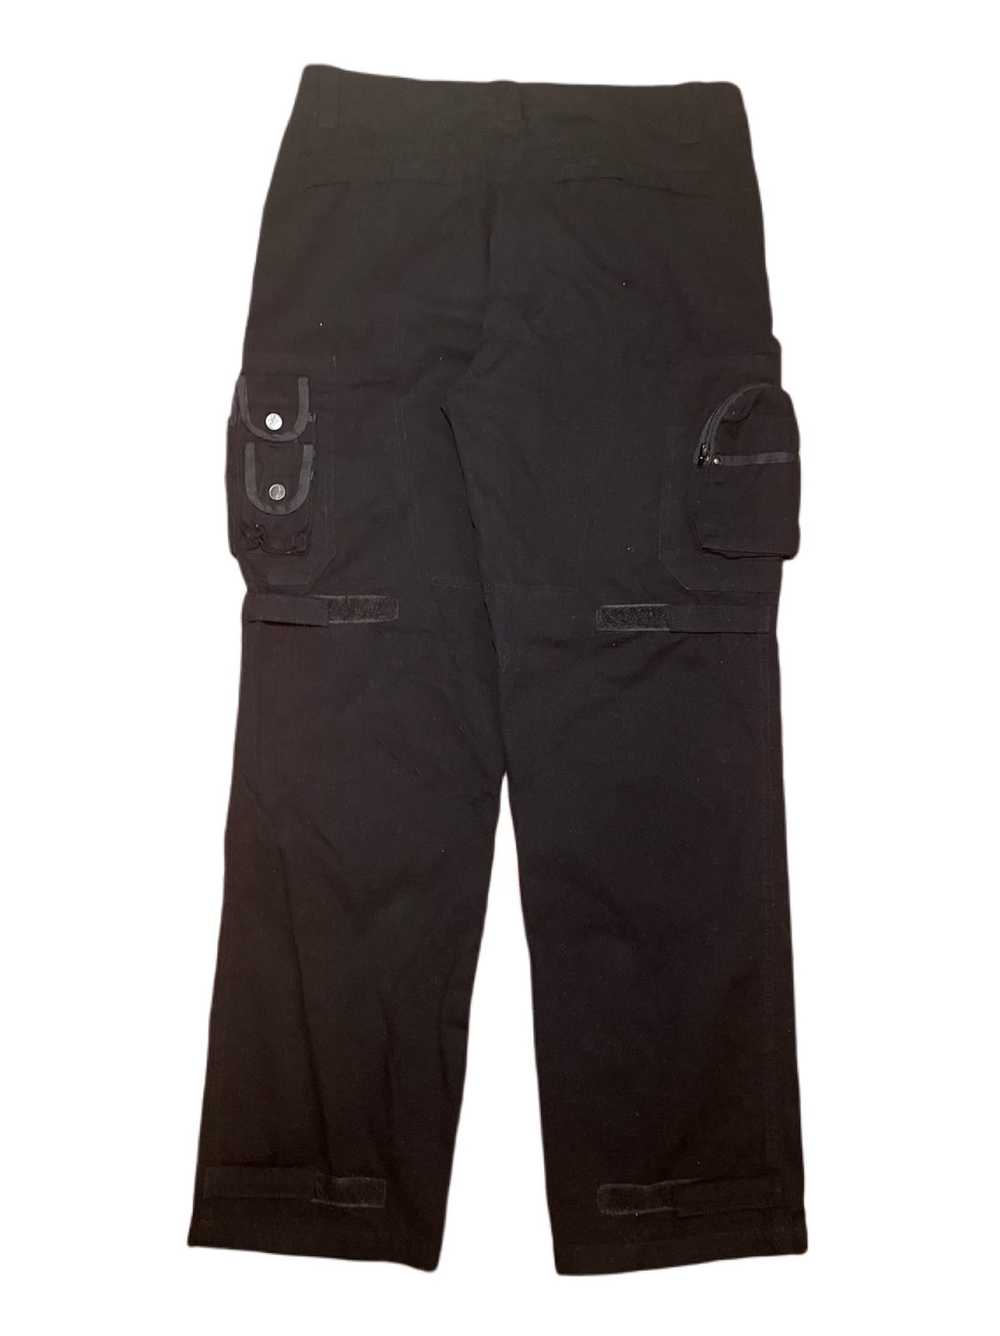 Vintage Tactical cargo pants - image 3